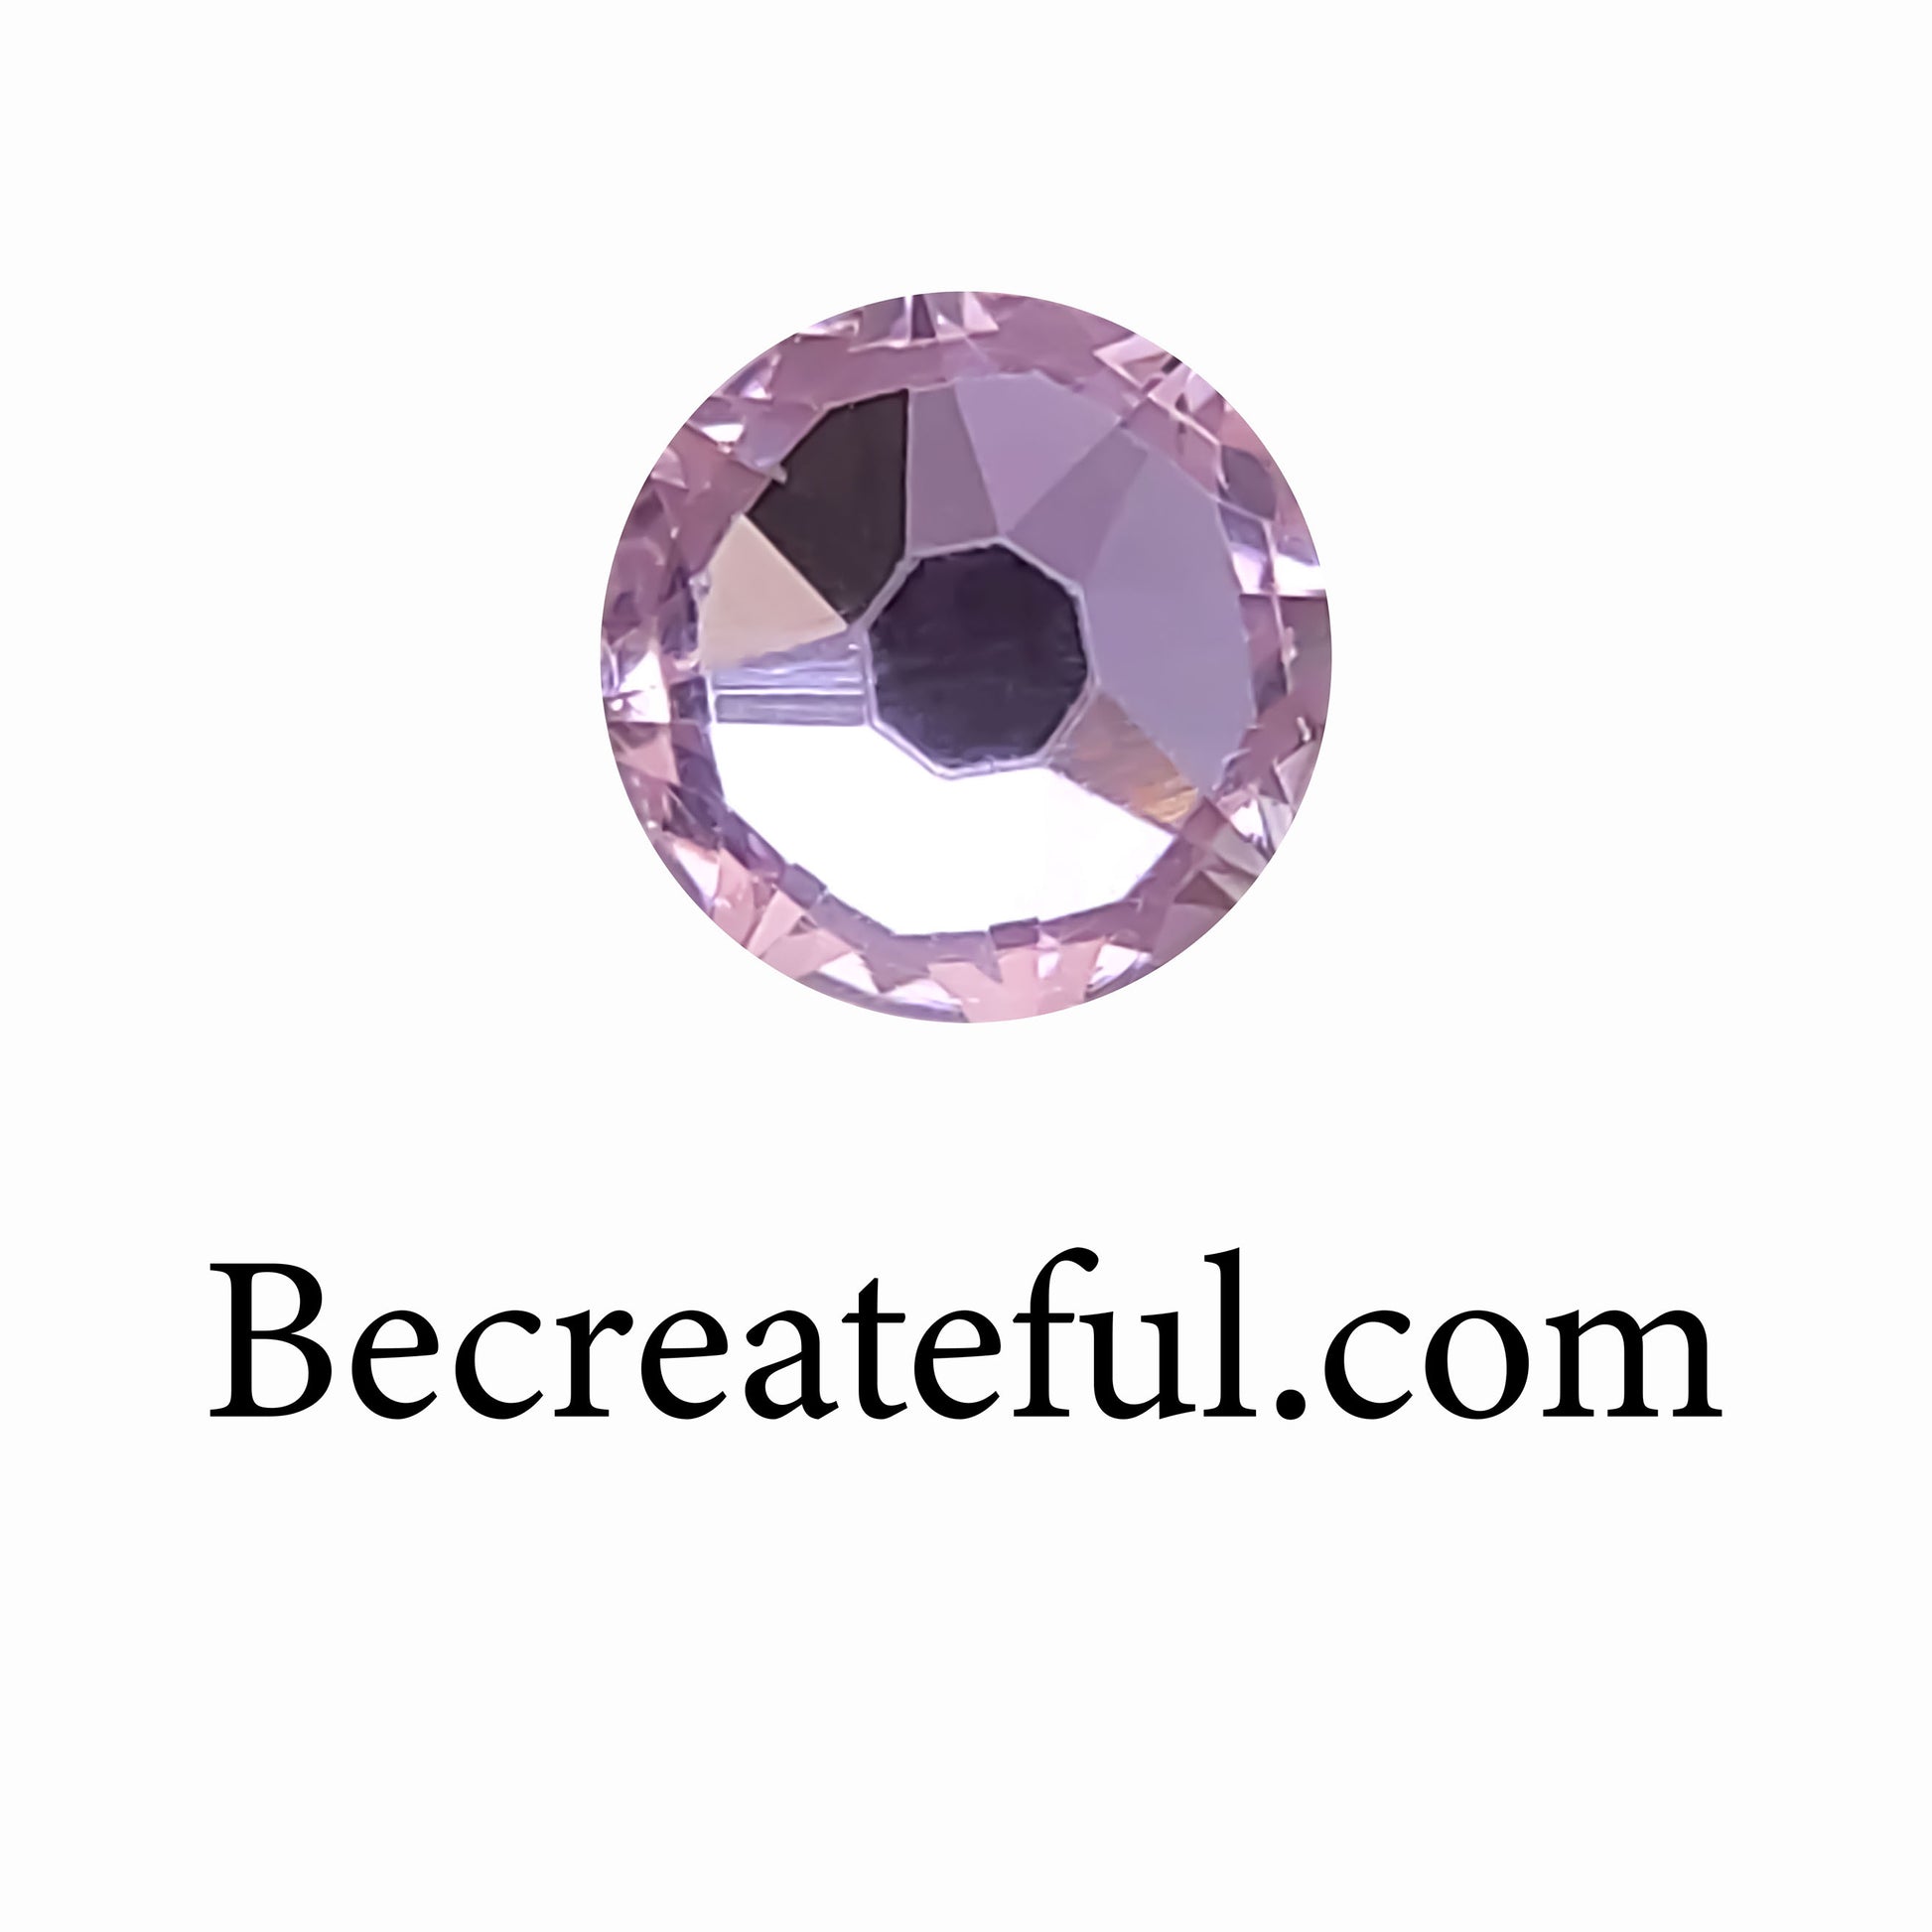 Flatback LUXE® Pink Foil Glass Rhinestones - Rhinestone – Be Createful